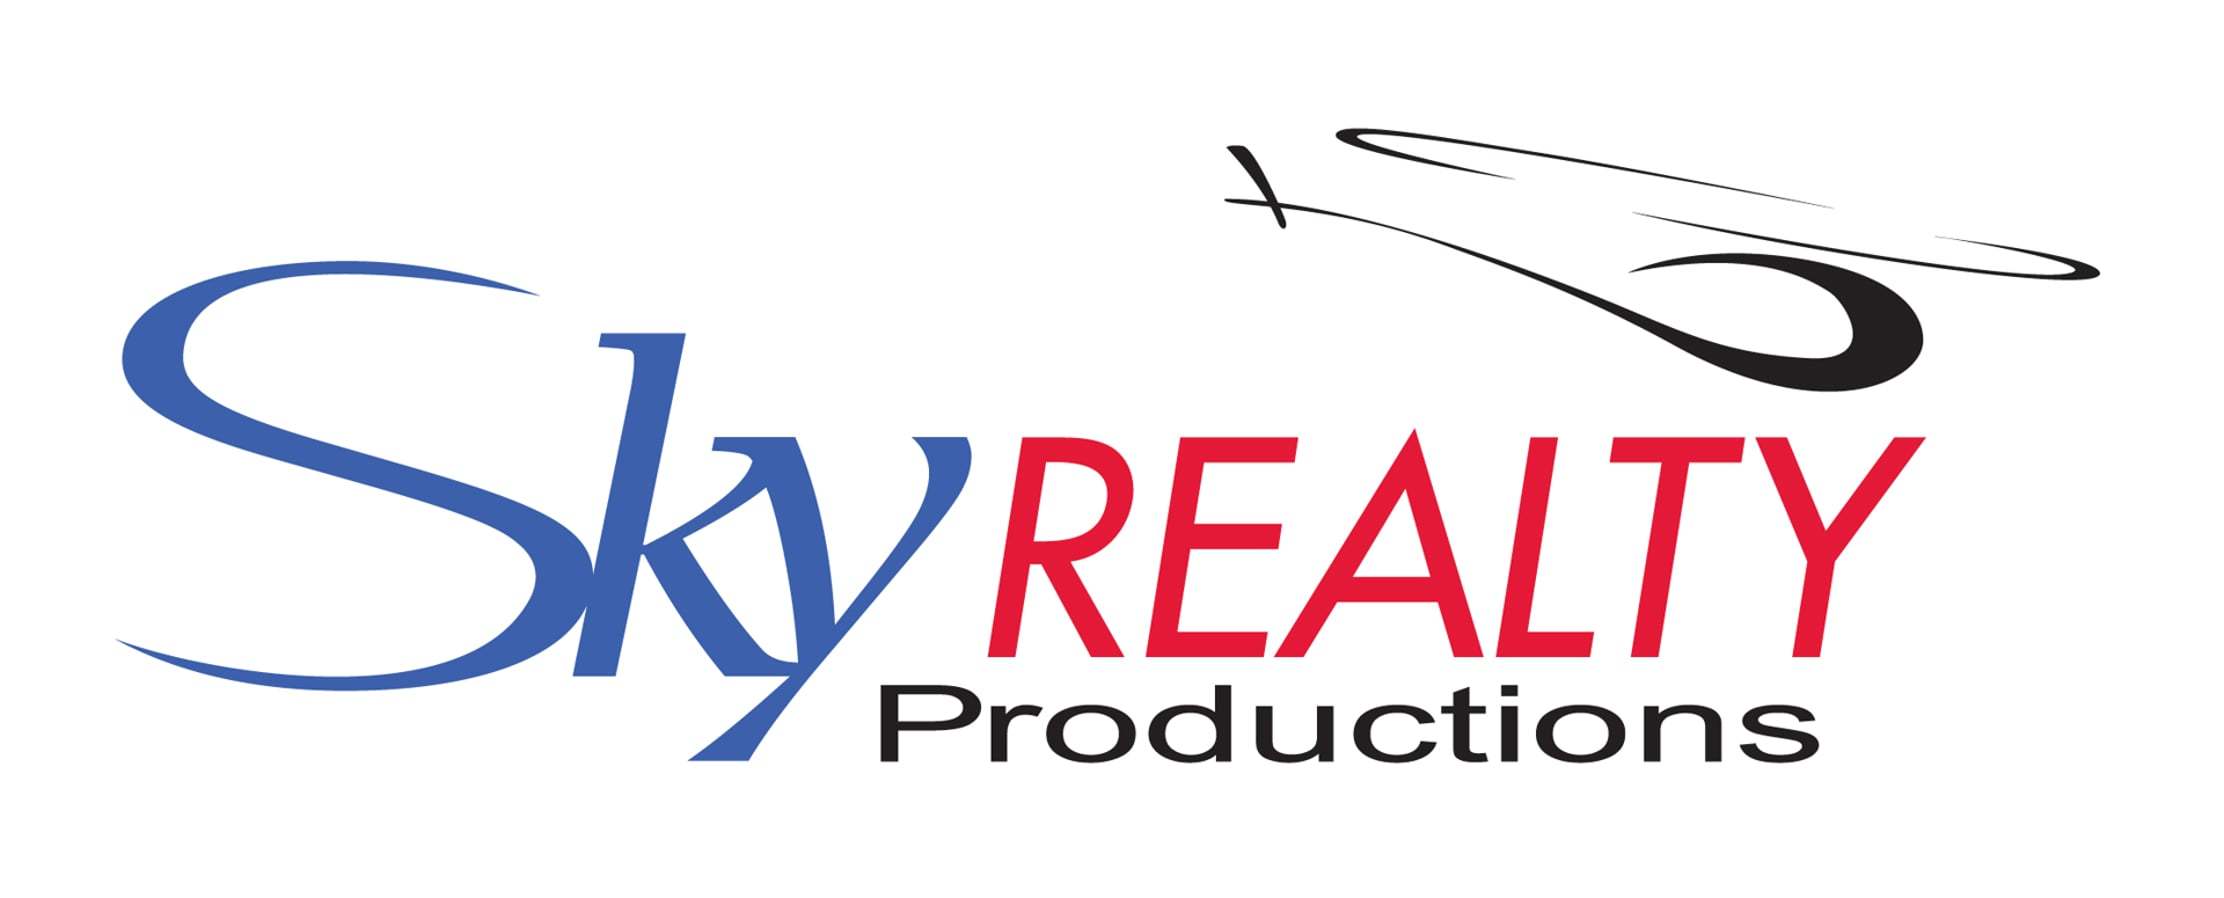 Sky Realty Productions Logo